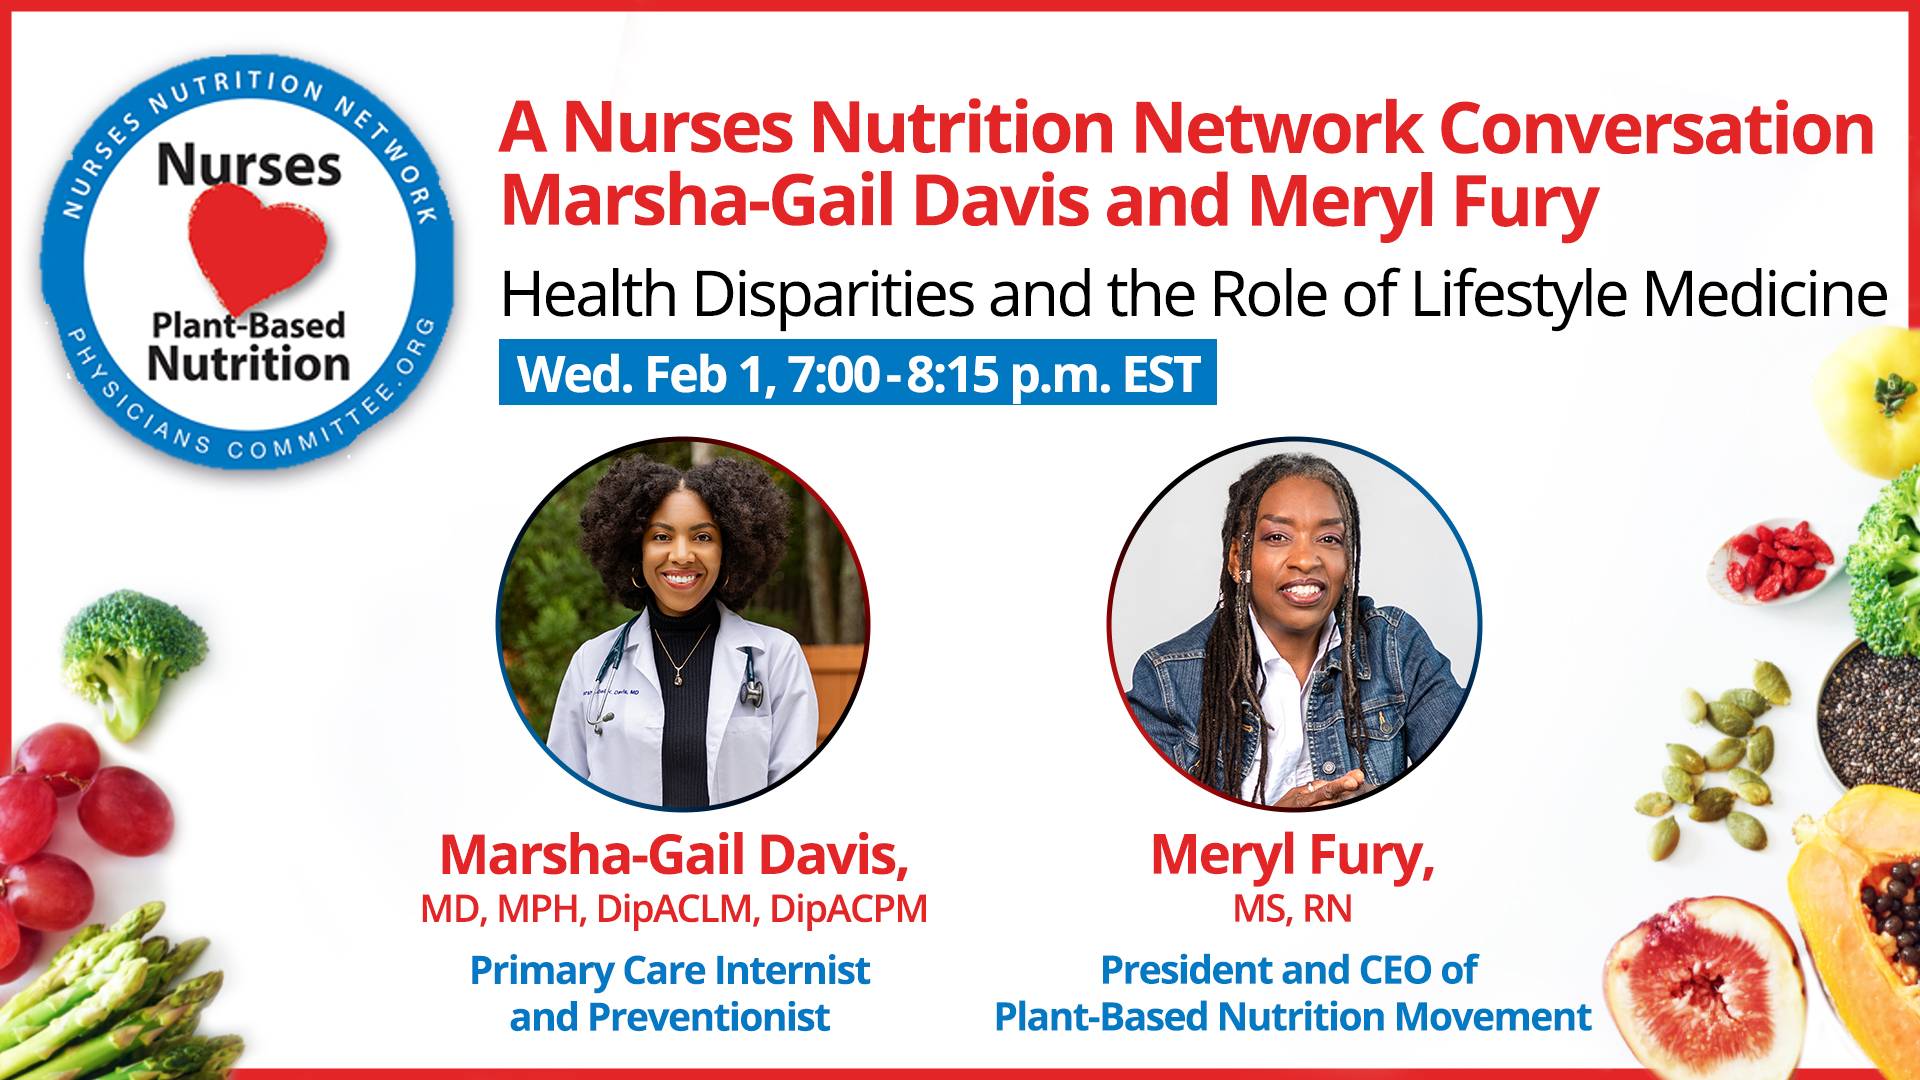 A Nurses Nutrition Network  Conversation With Marsha-Gail Davis, MD, MPH, DipACLM, DipACPM, and Meryl Fury, MS, RN